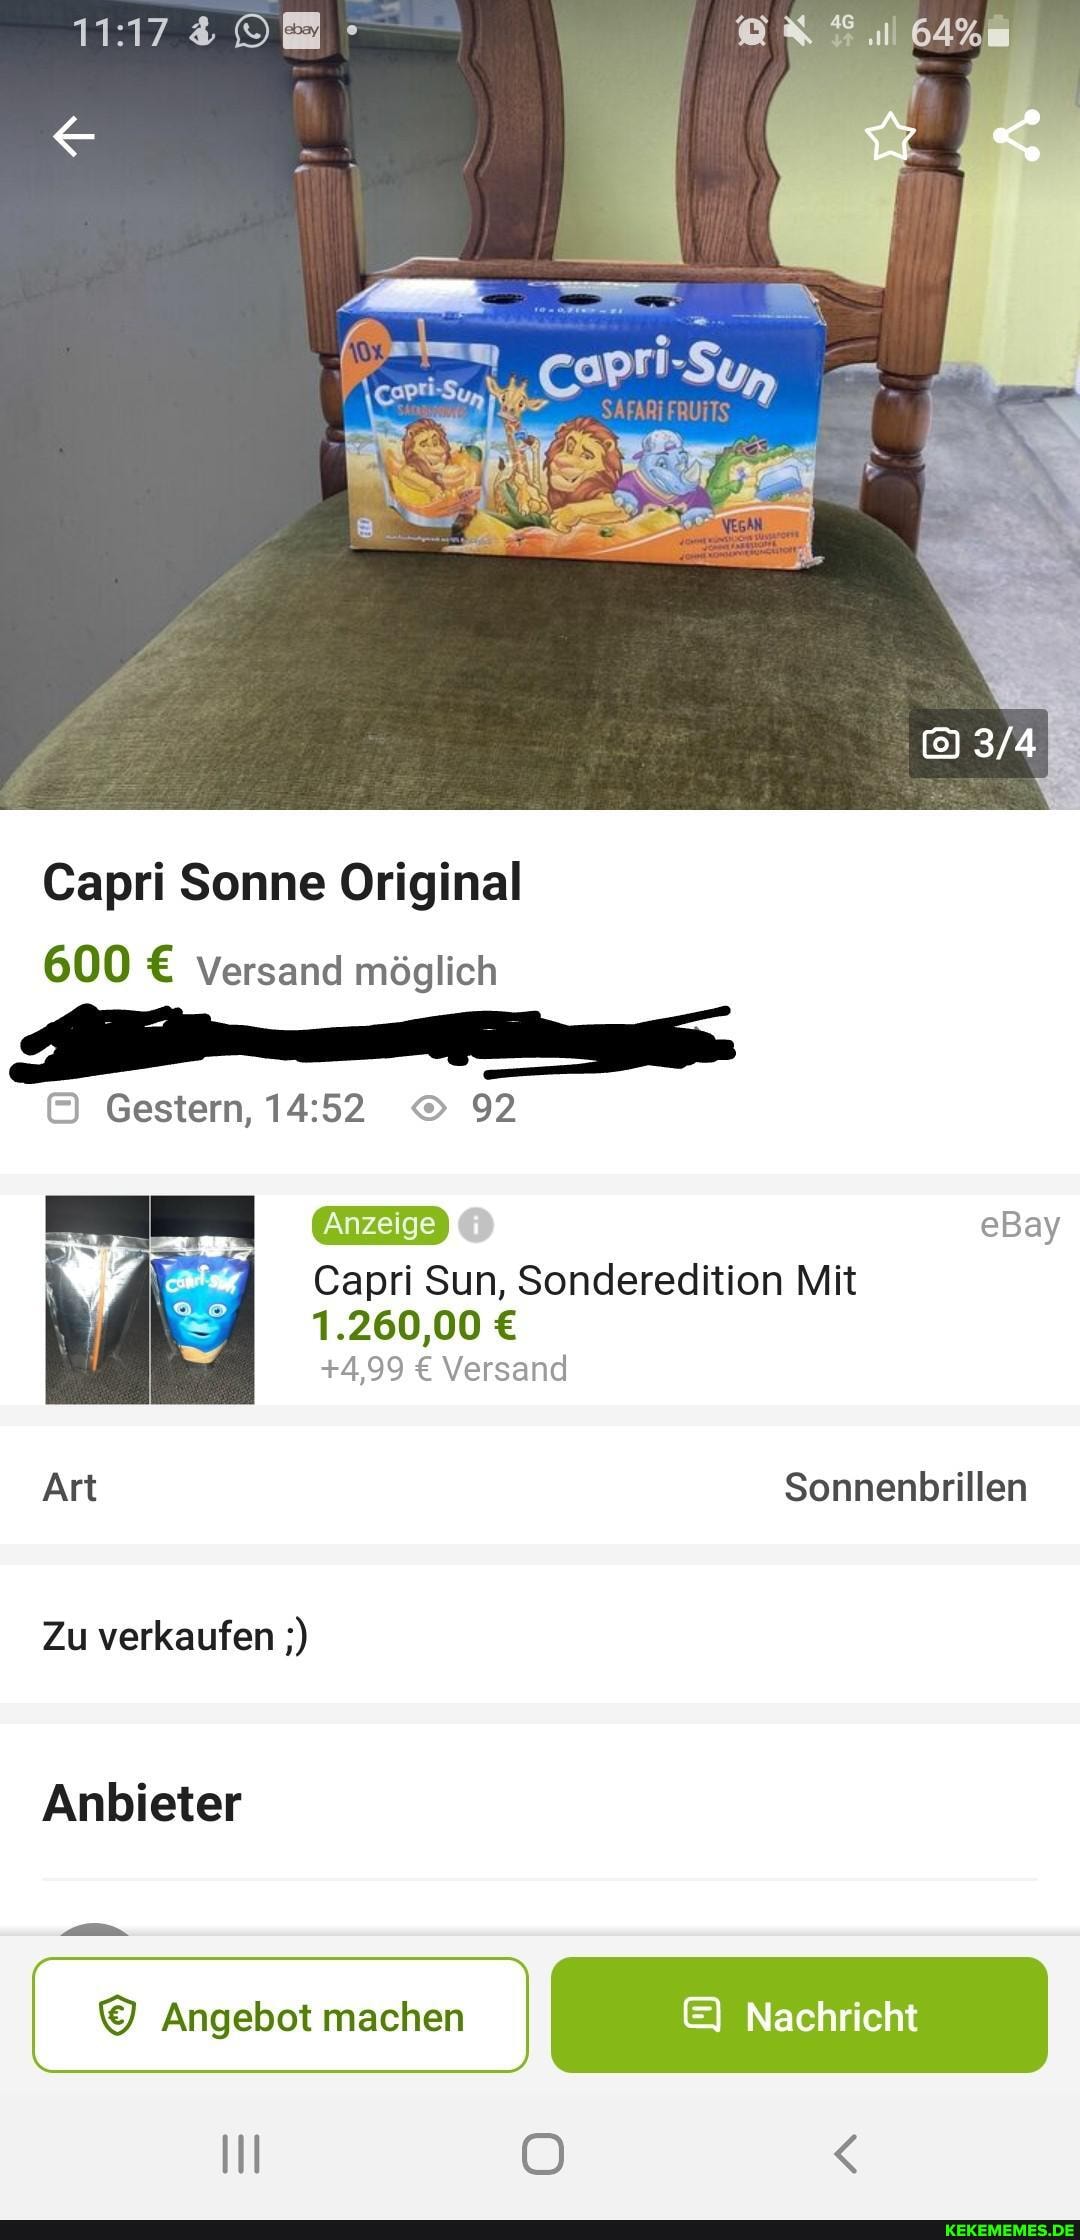 Capri Sonne Original 600 Versand möglich Gestern, 92 eBay Capri Sun, Sonderedit